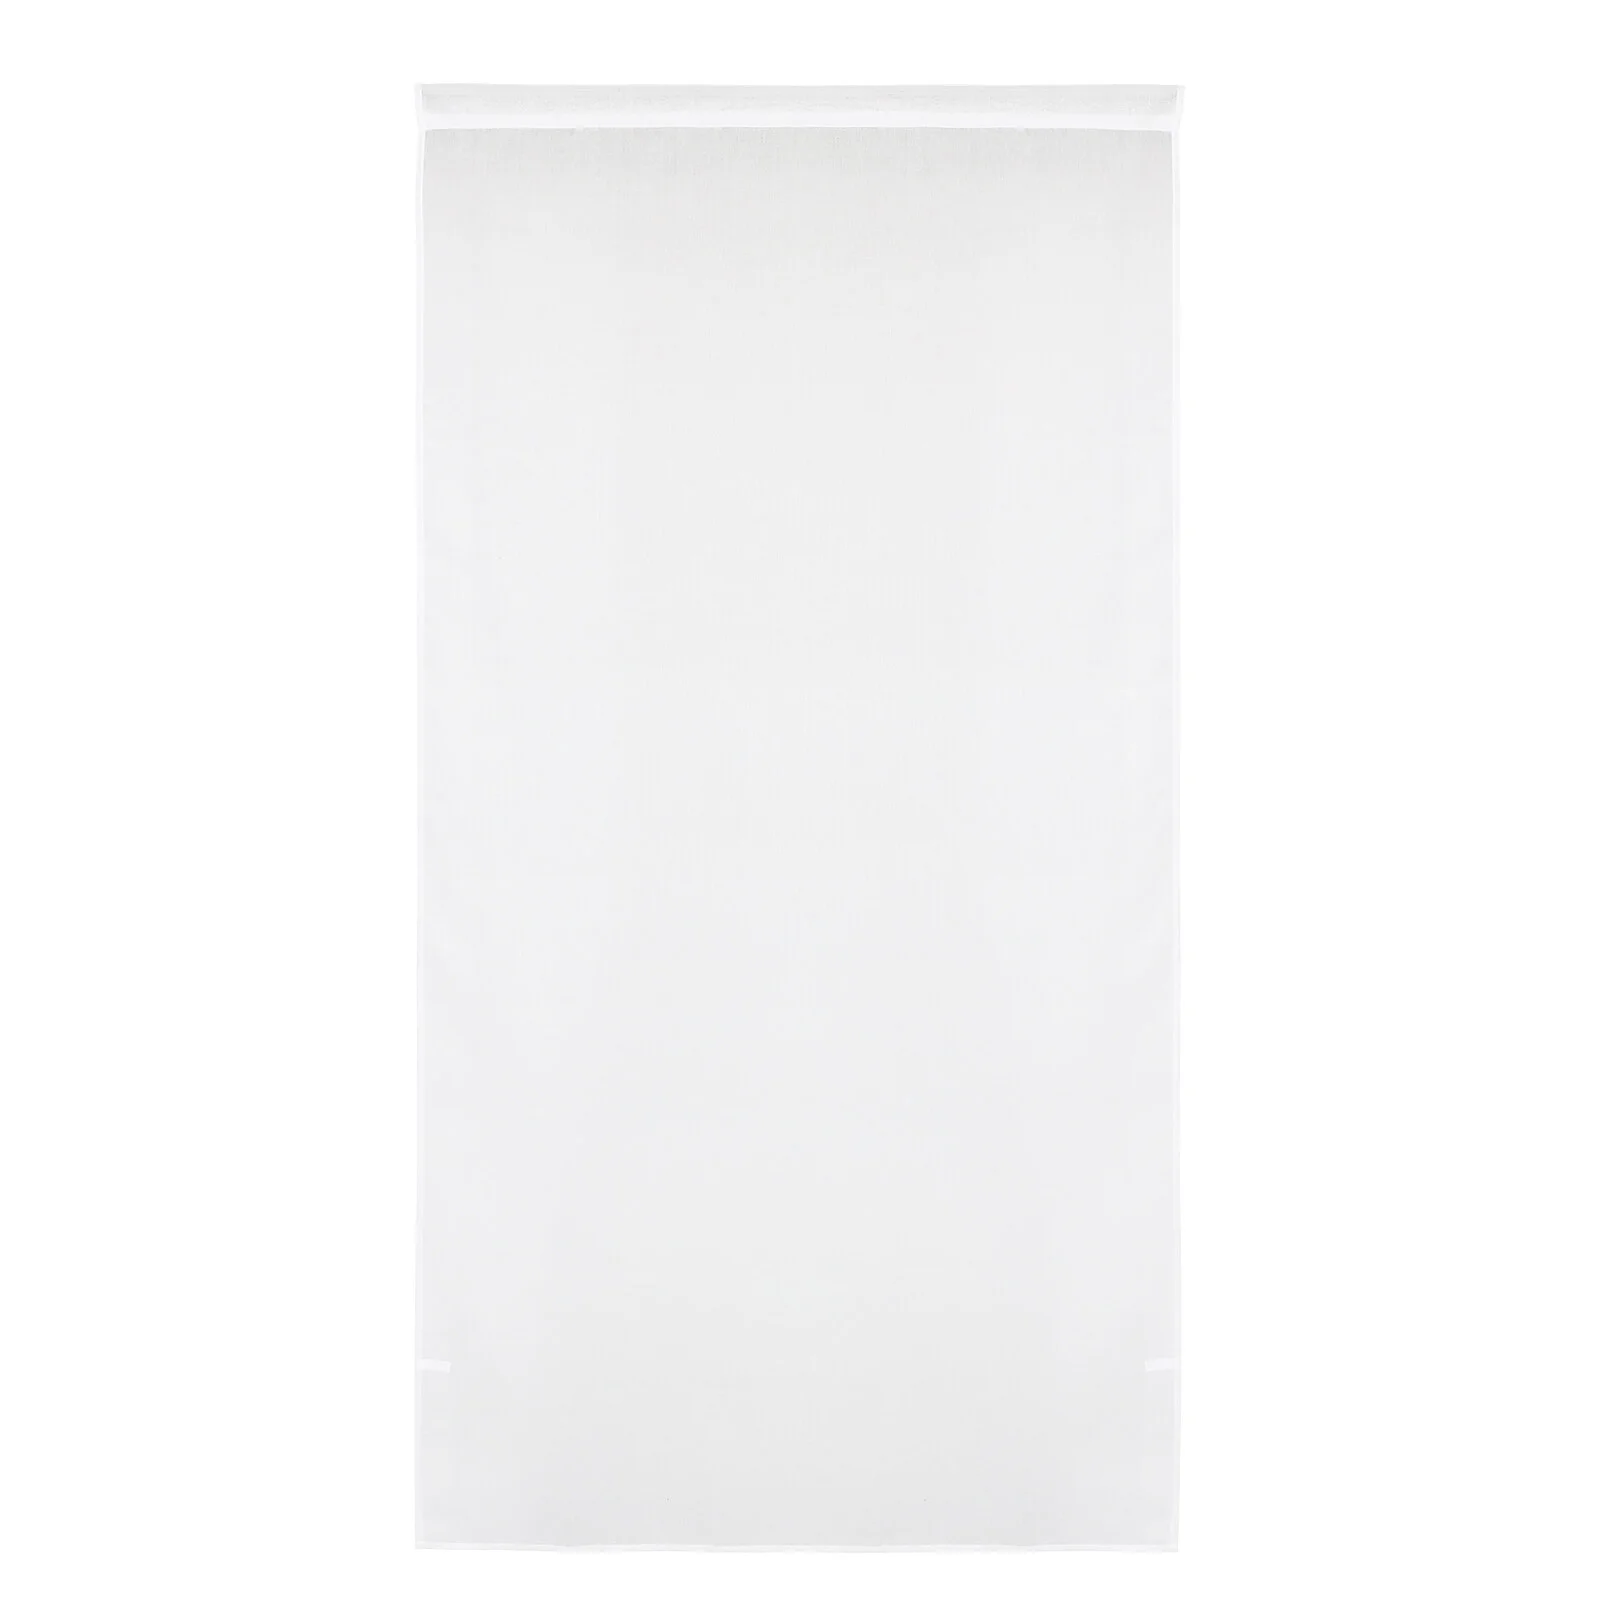 

VOSAREA Window Voile Sheer 100X200cm Semi Linen Curtain Panel for Balcony Bedroom Living Room (White)